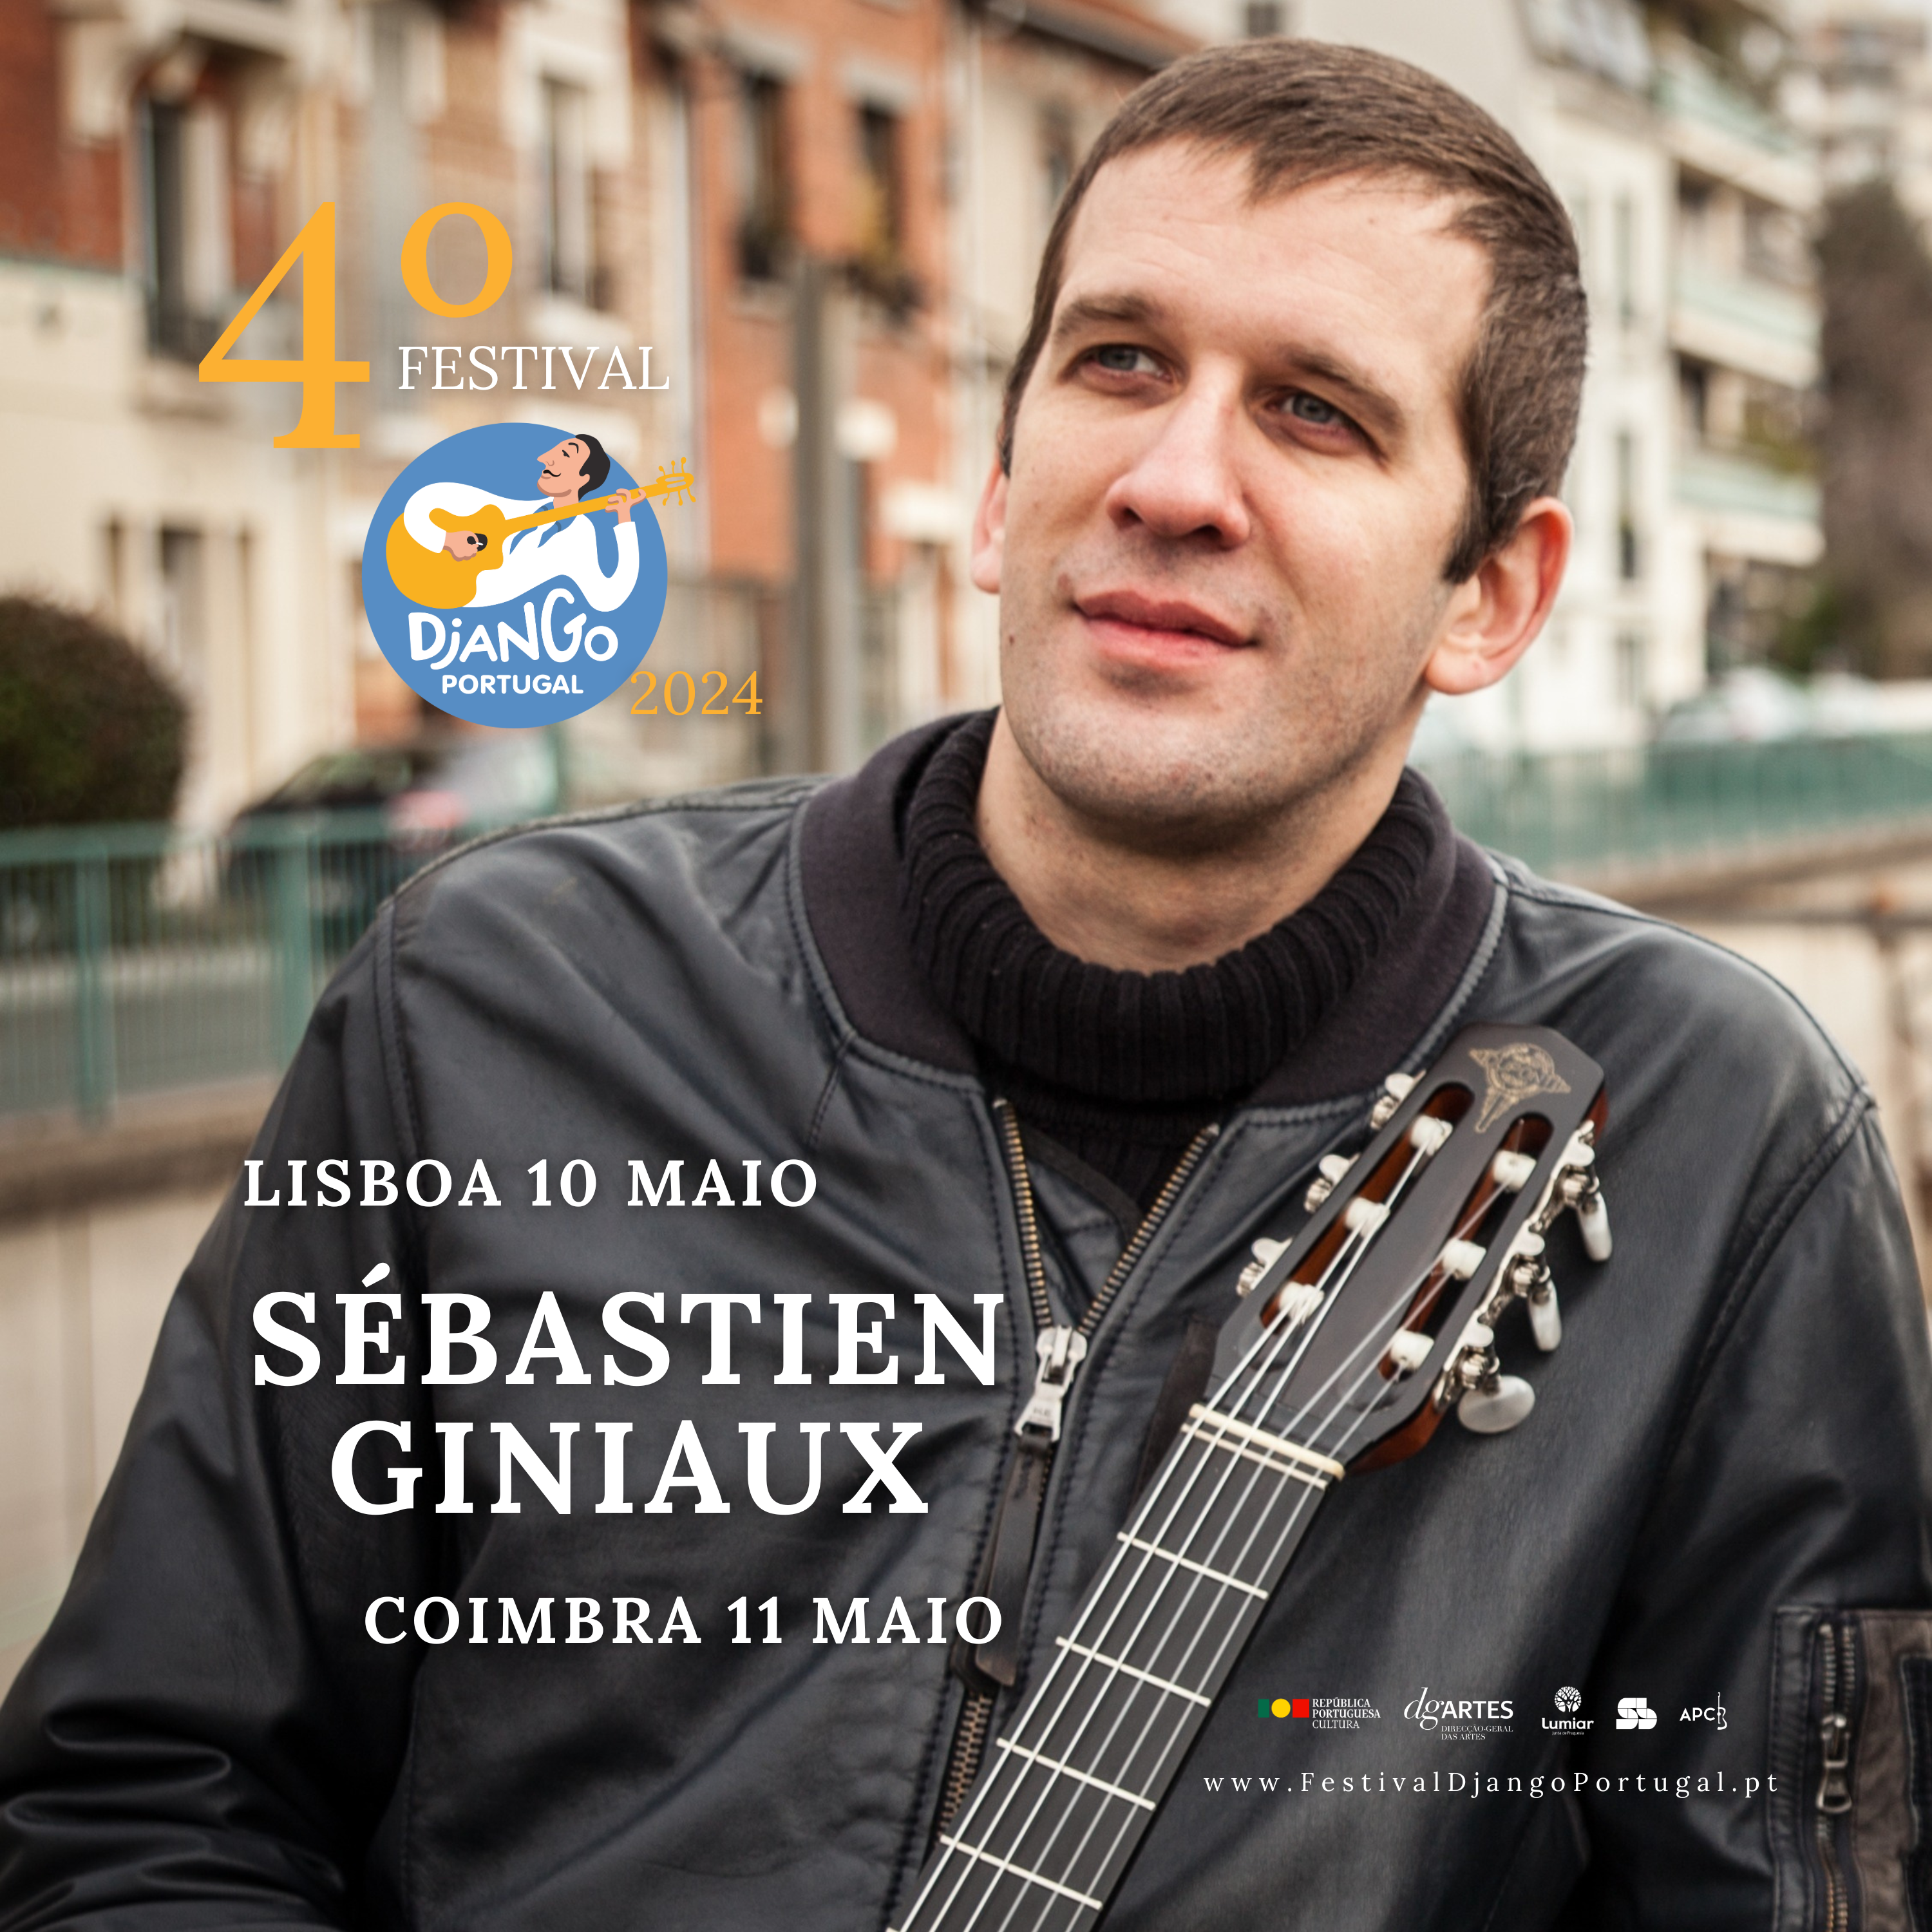 Sebastien Giniaux at Festival Django Portugal 2024